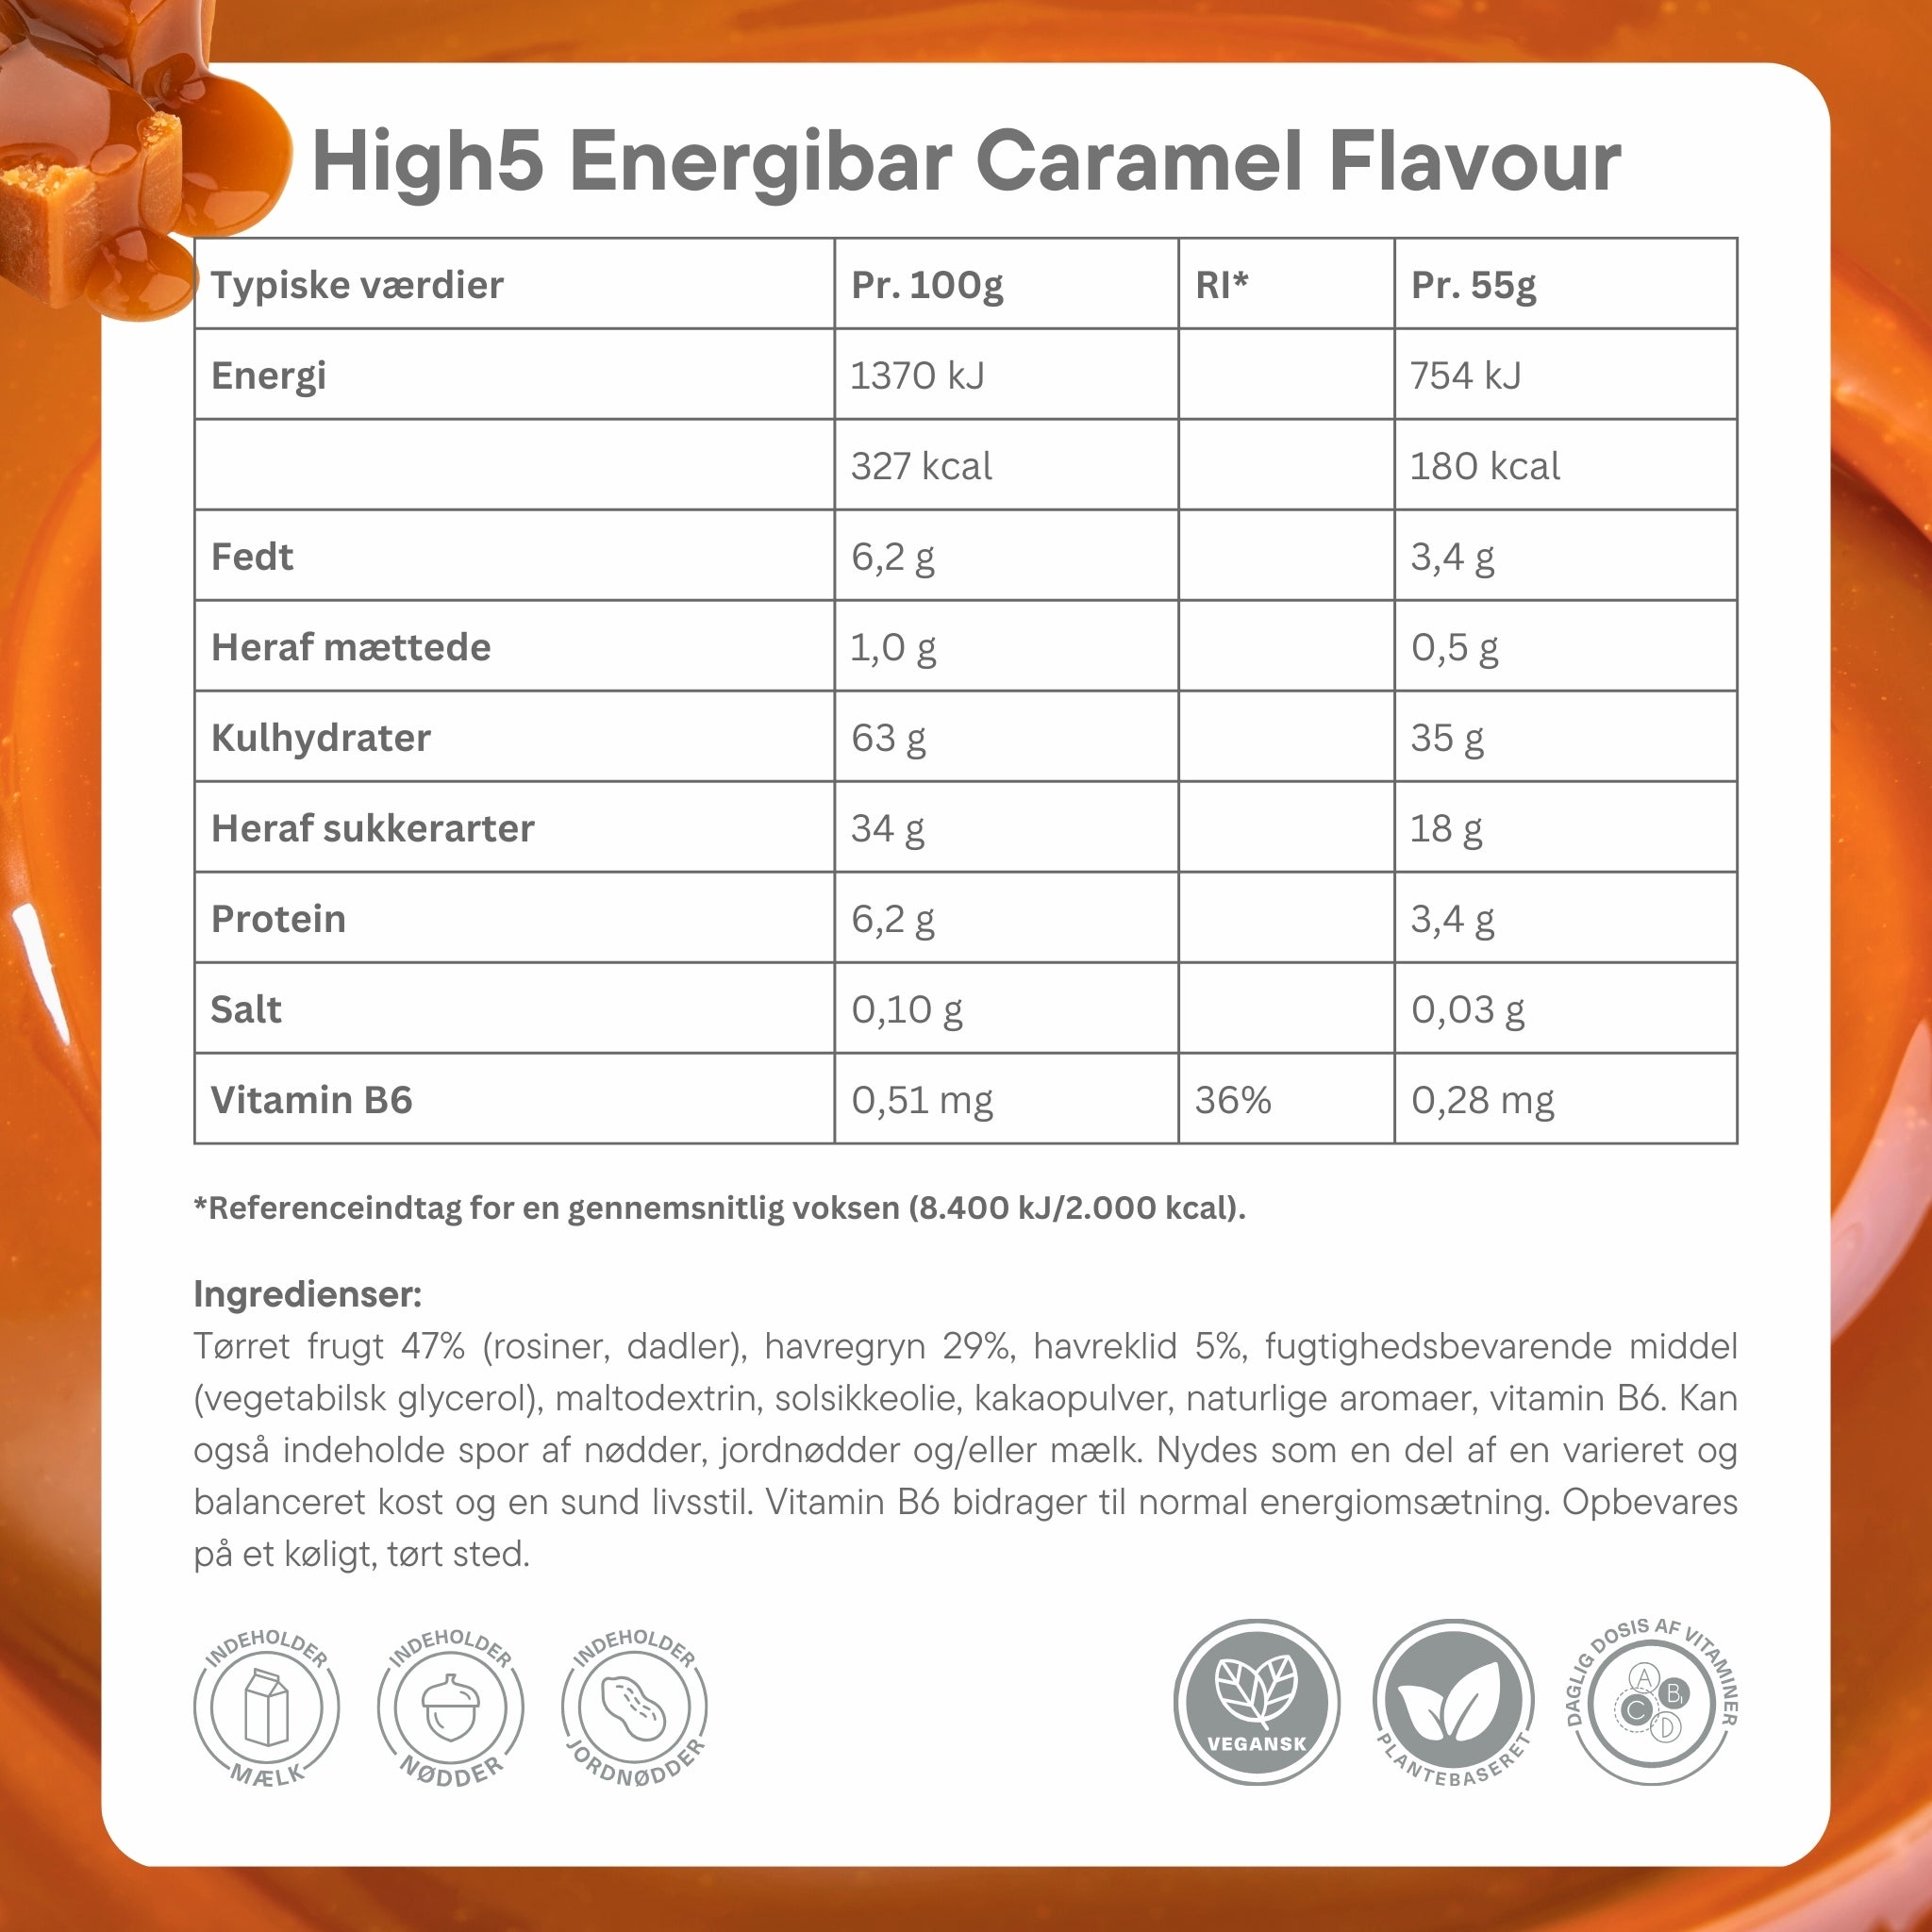 High5 Energibar Caramel Flavour - Ingredients DK